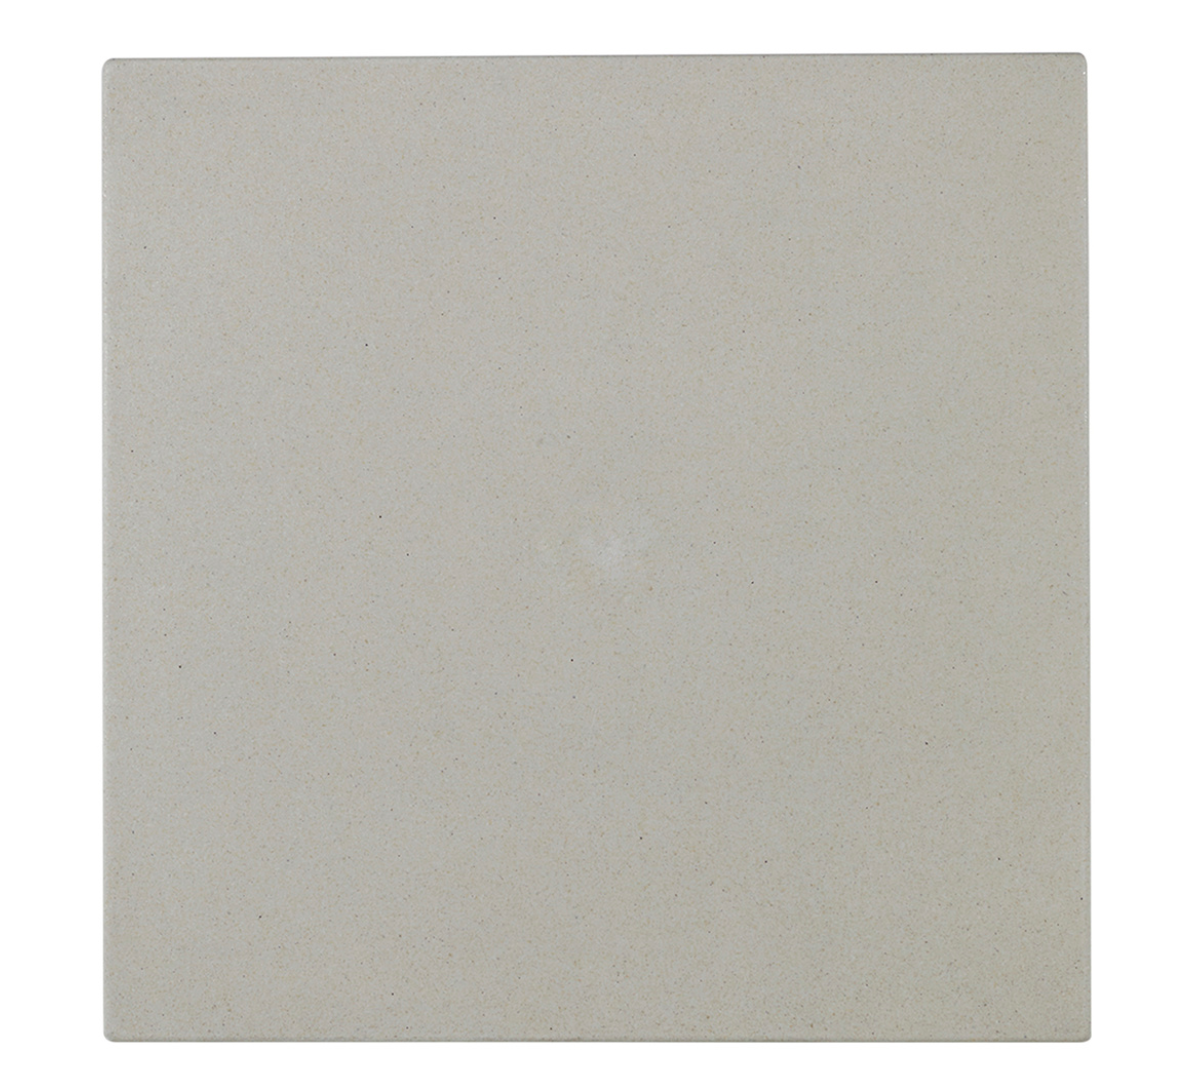 30” Square Top (No Hole) Classic White Stone